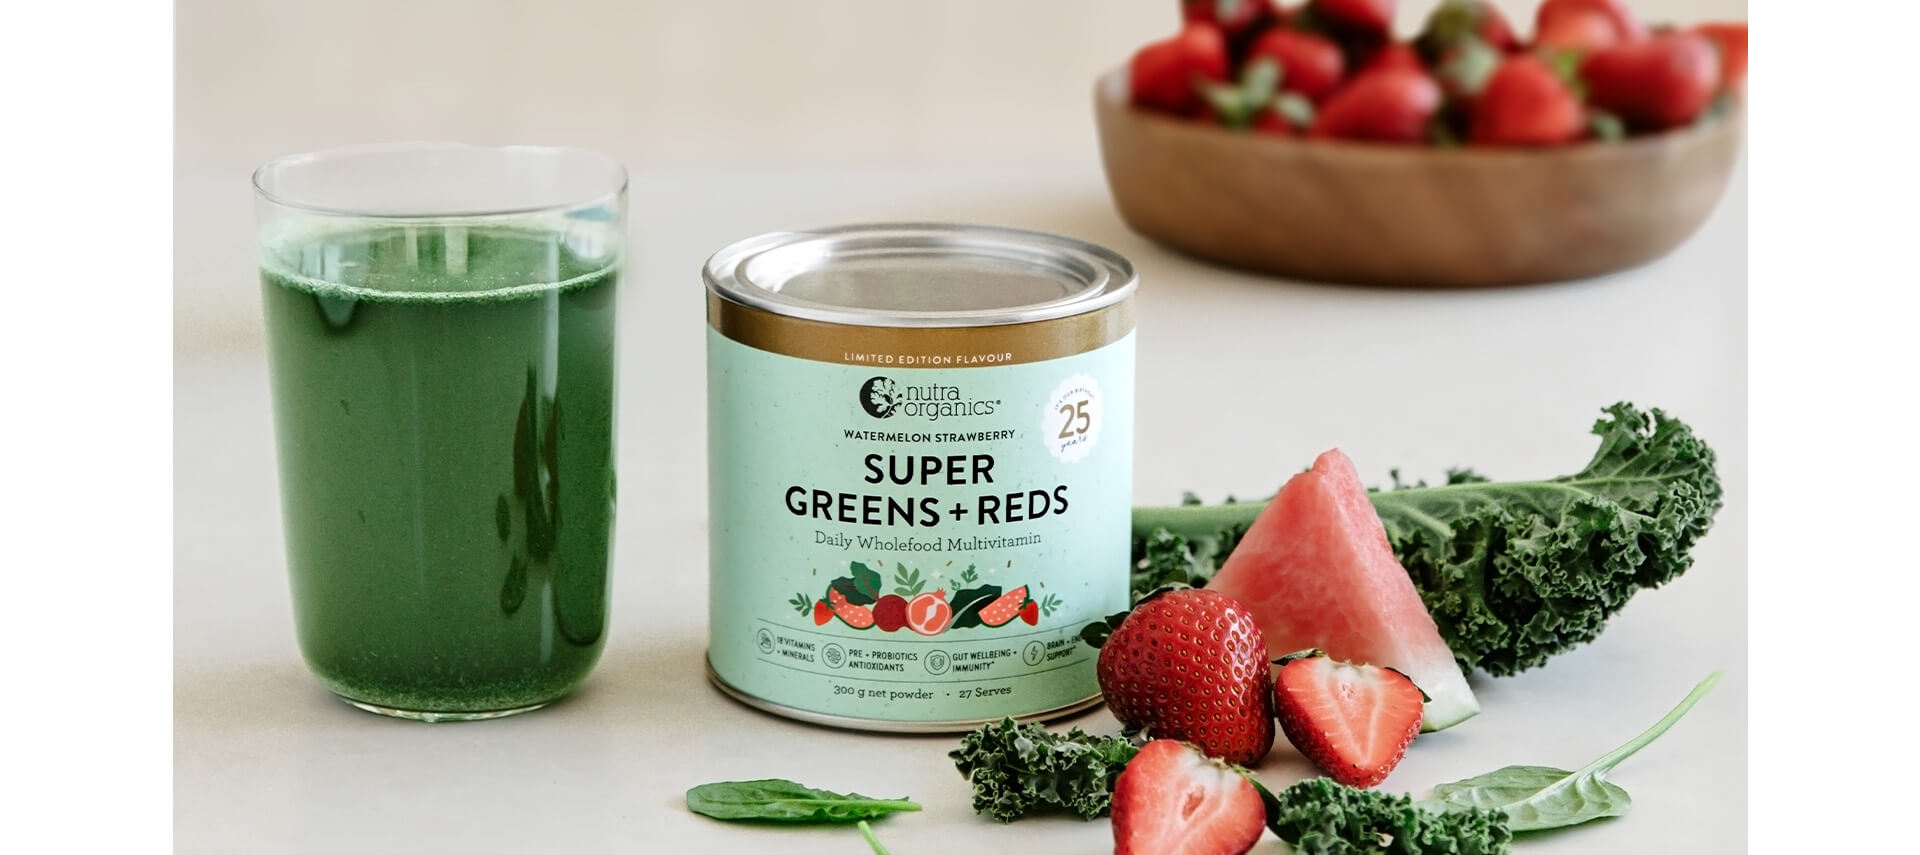 Super Greens + Reds for energy